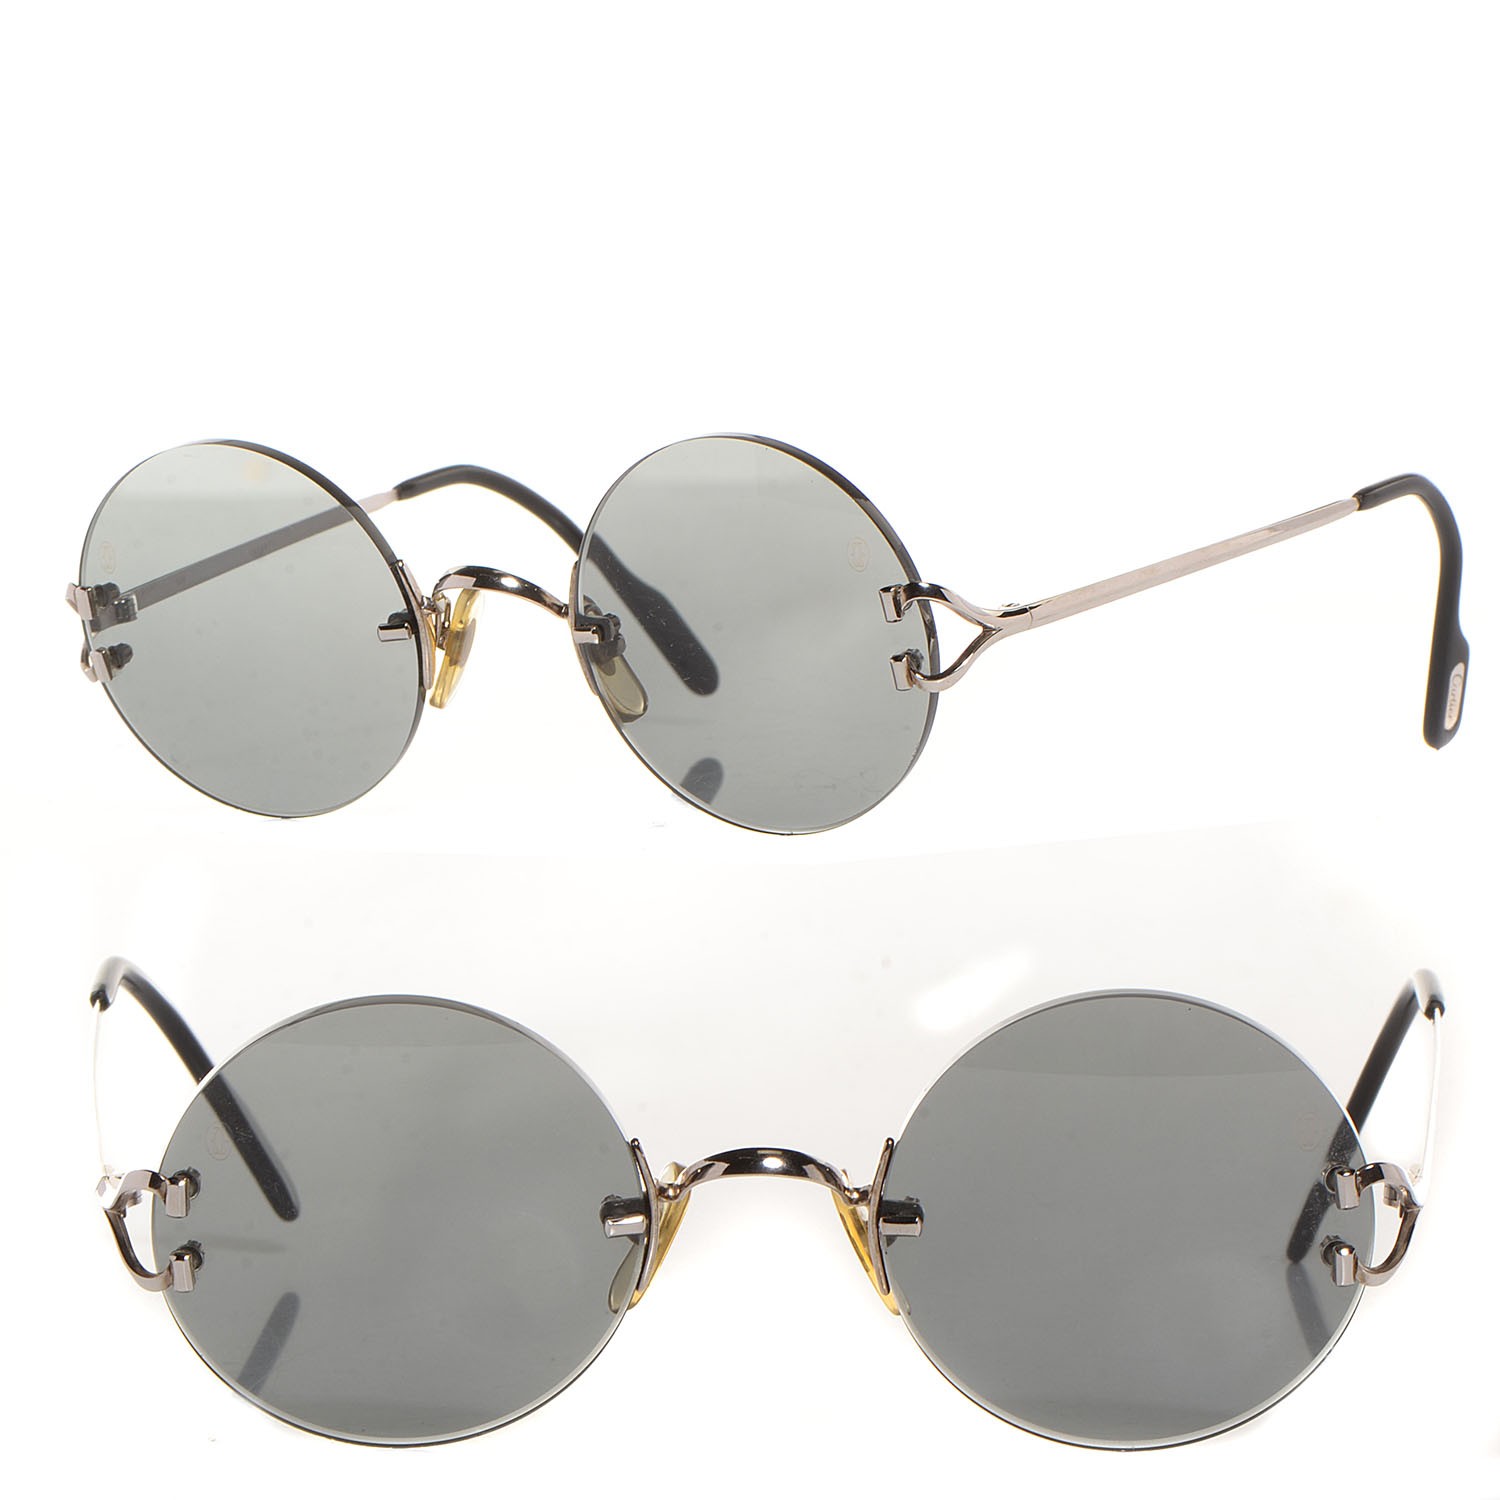 circle cartier sunglasses